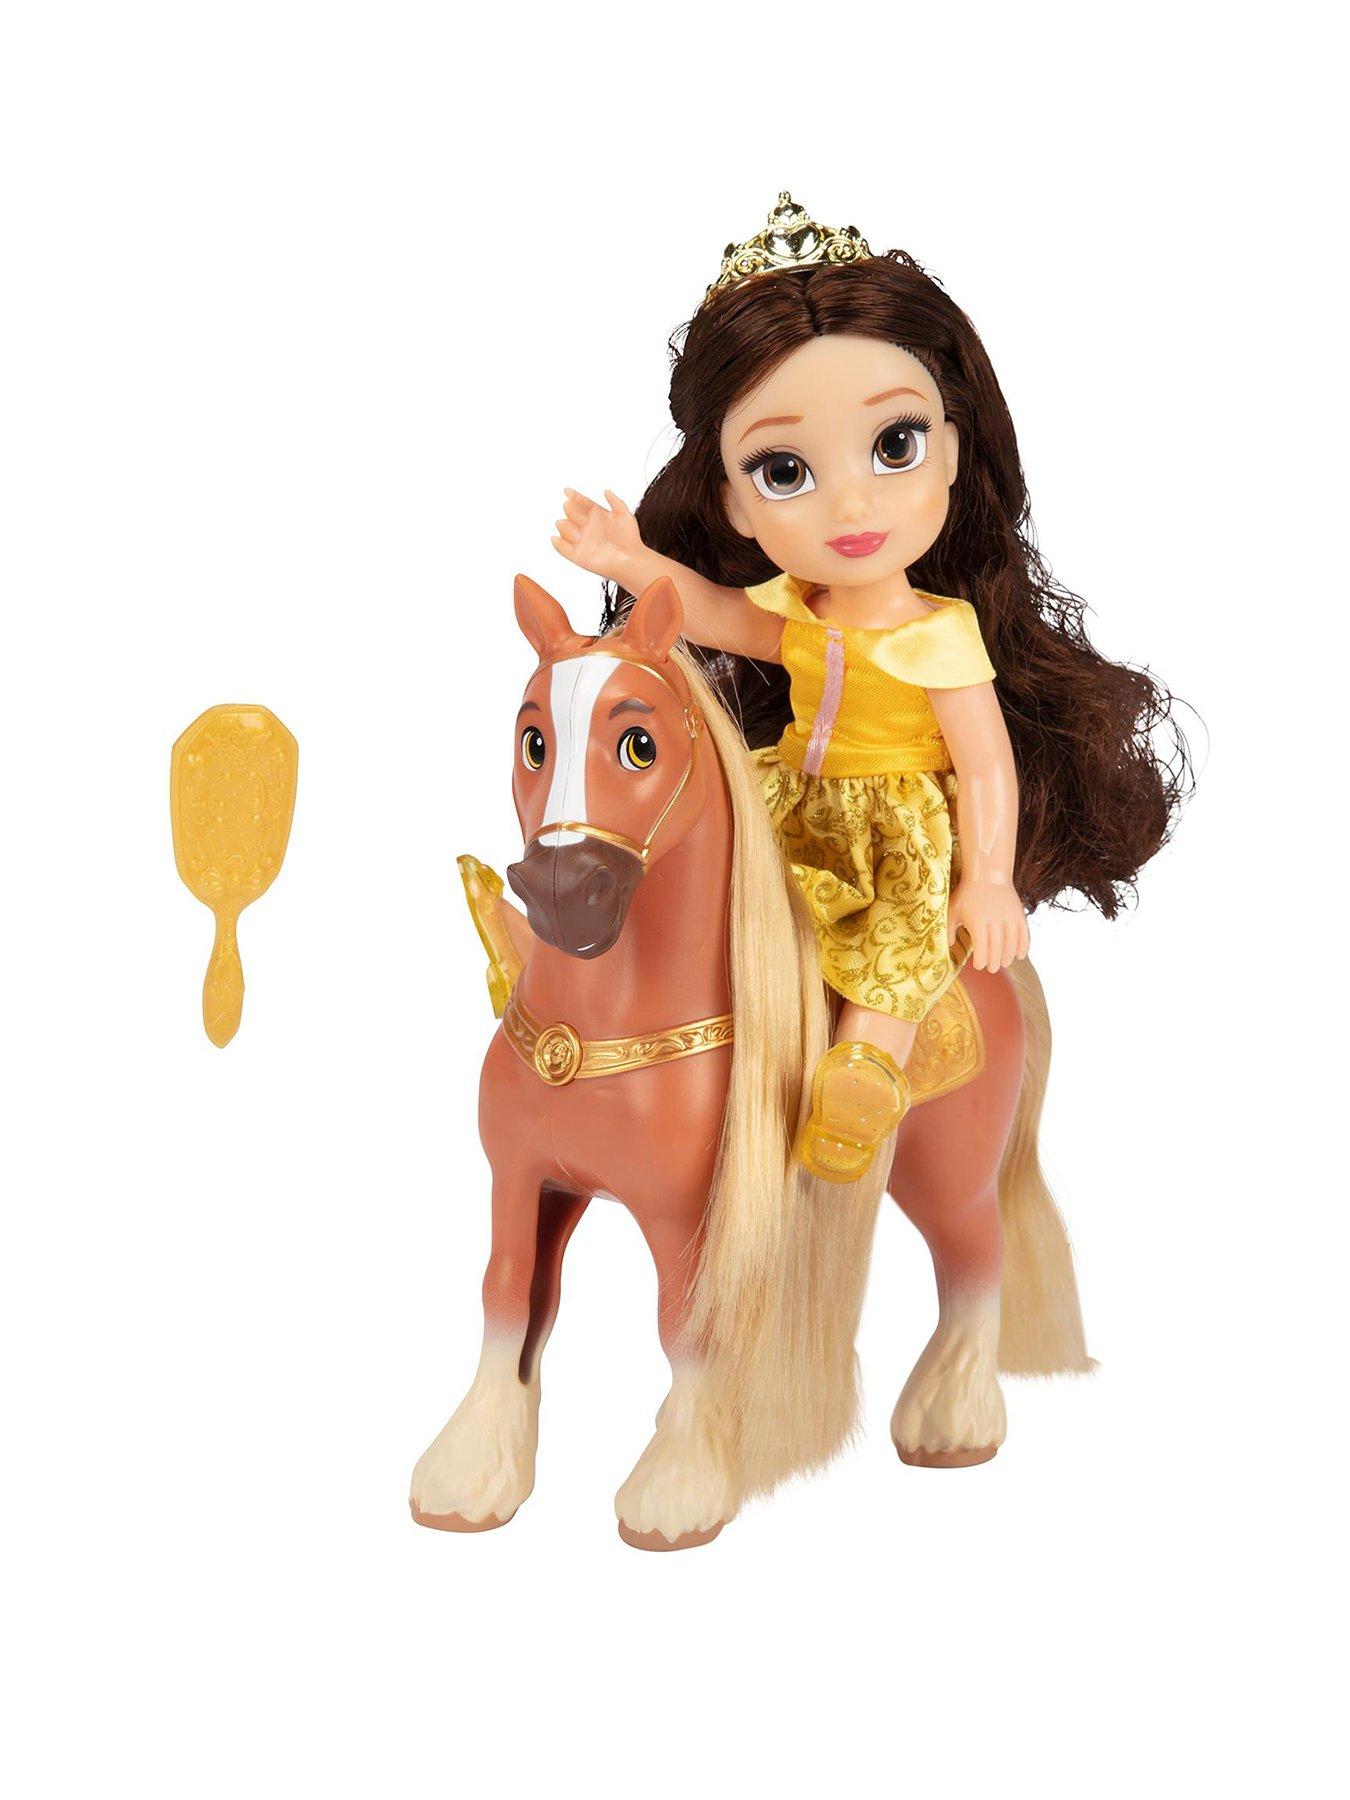 Ty Disney Princess Belle 15 Plush Doll